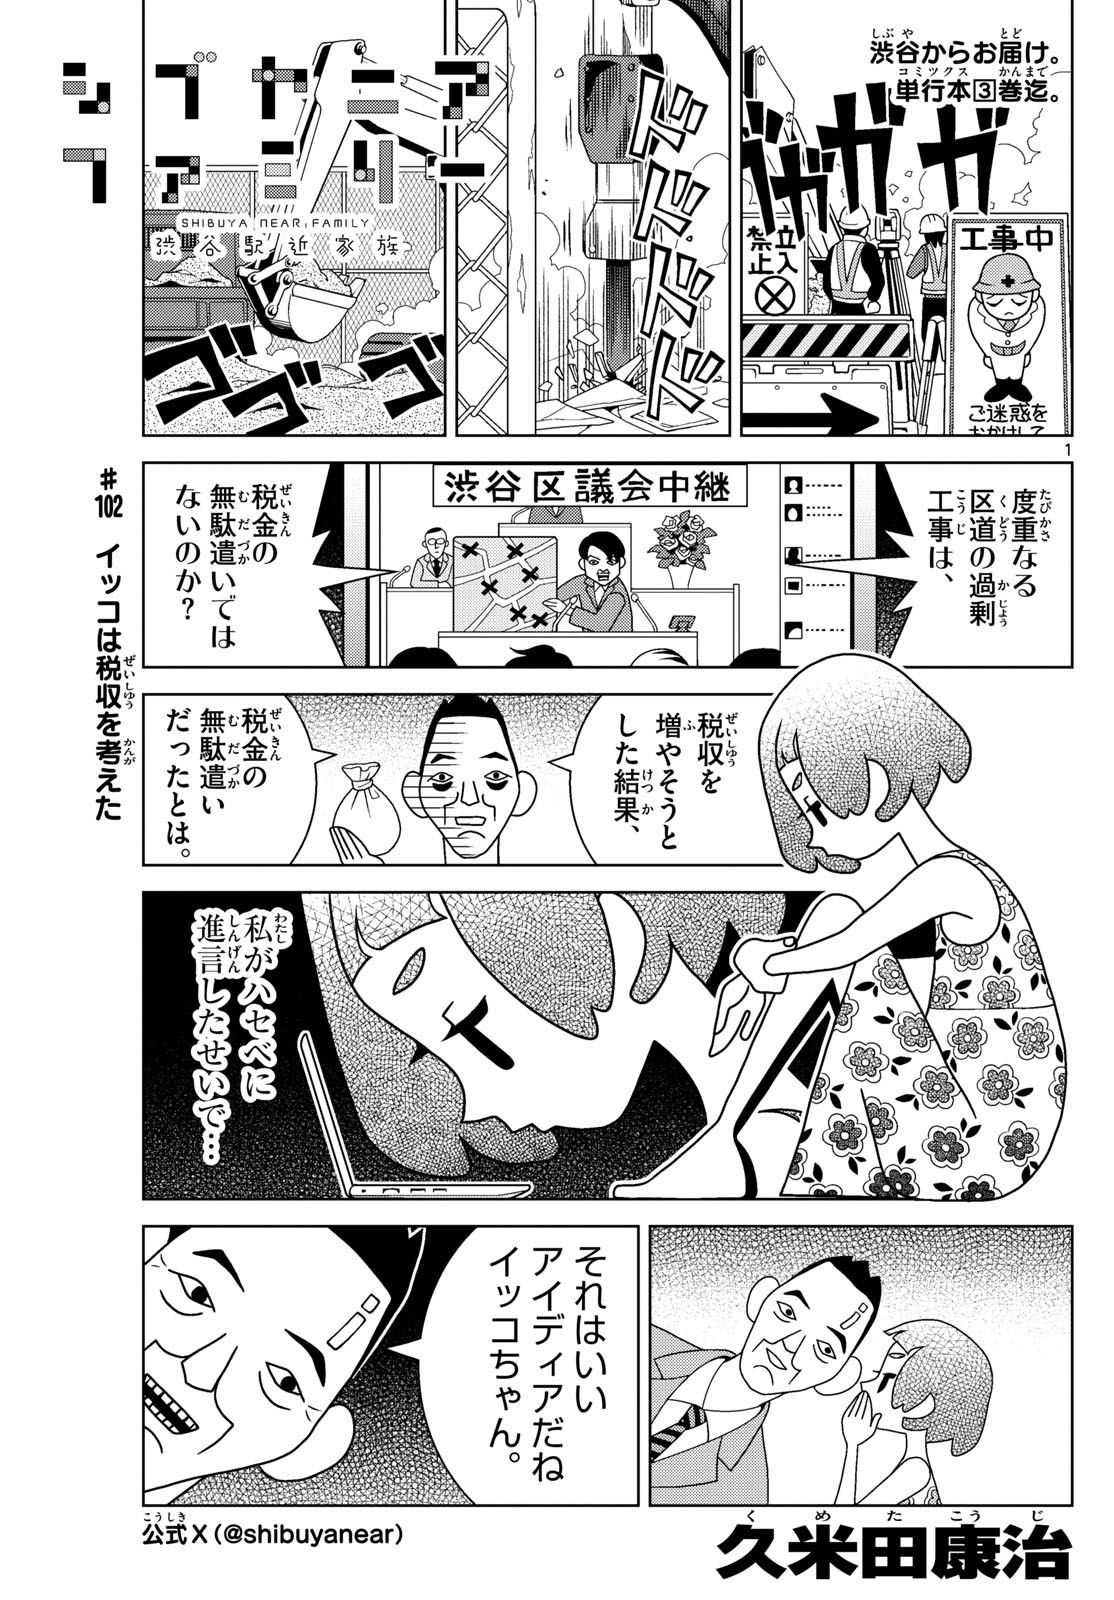 Shibuya Near Family - Chapter 102 - Page 1